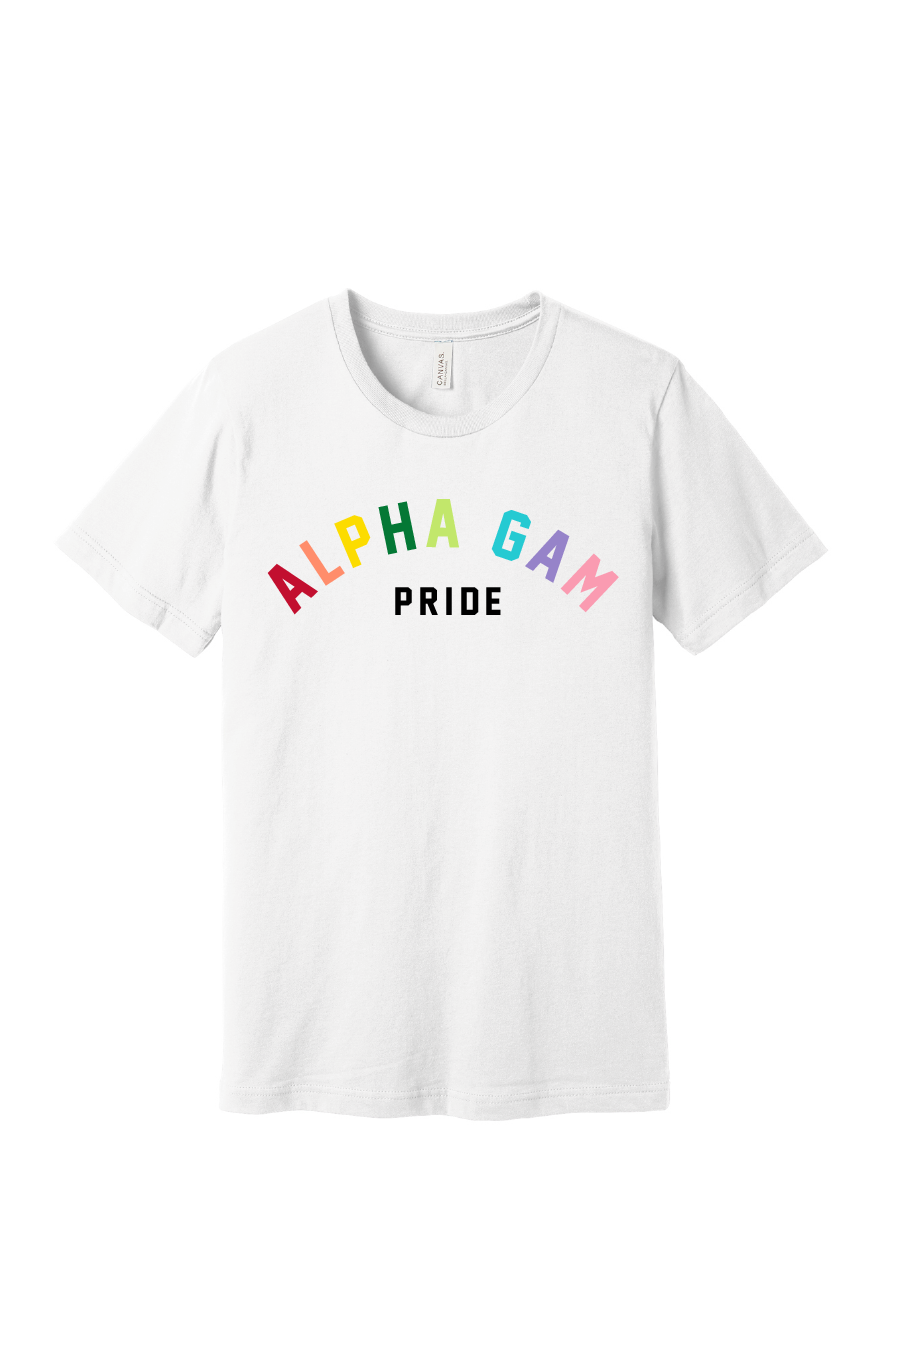 Alpha Gam Pride Tee